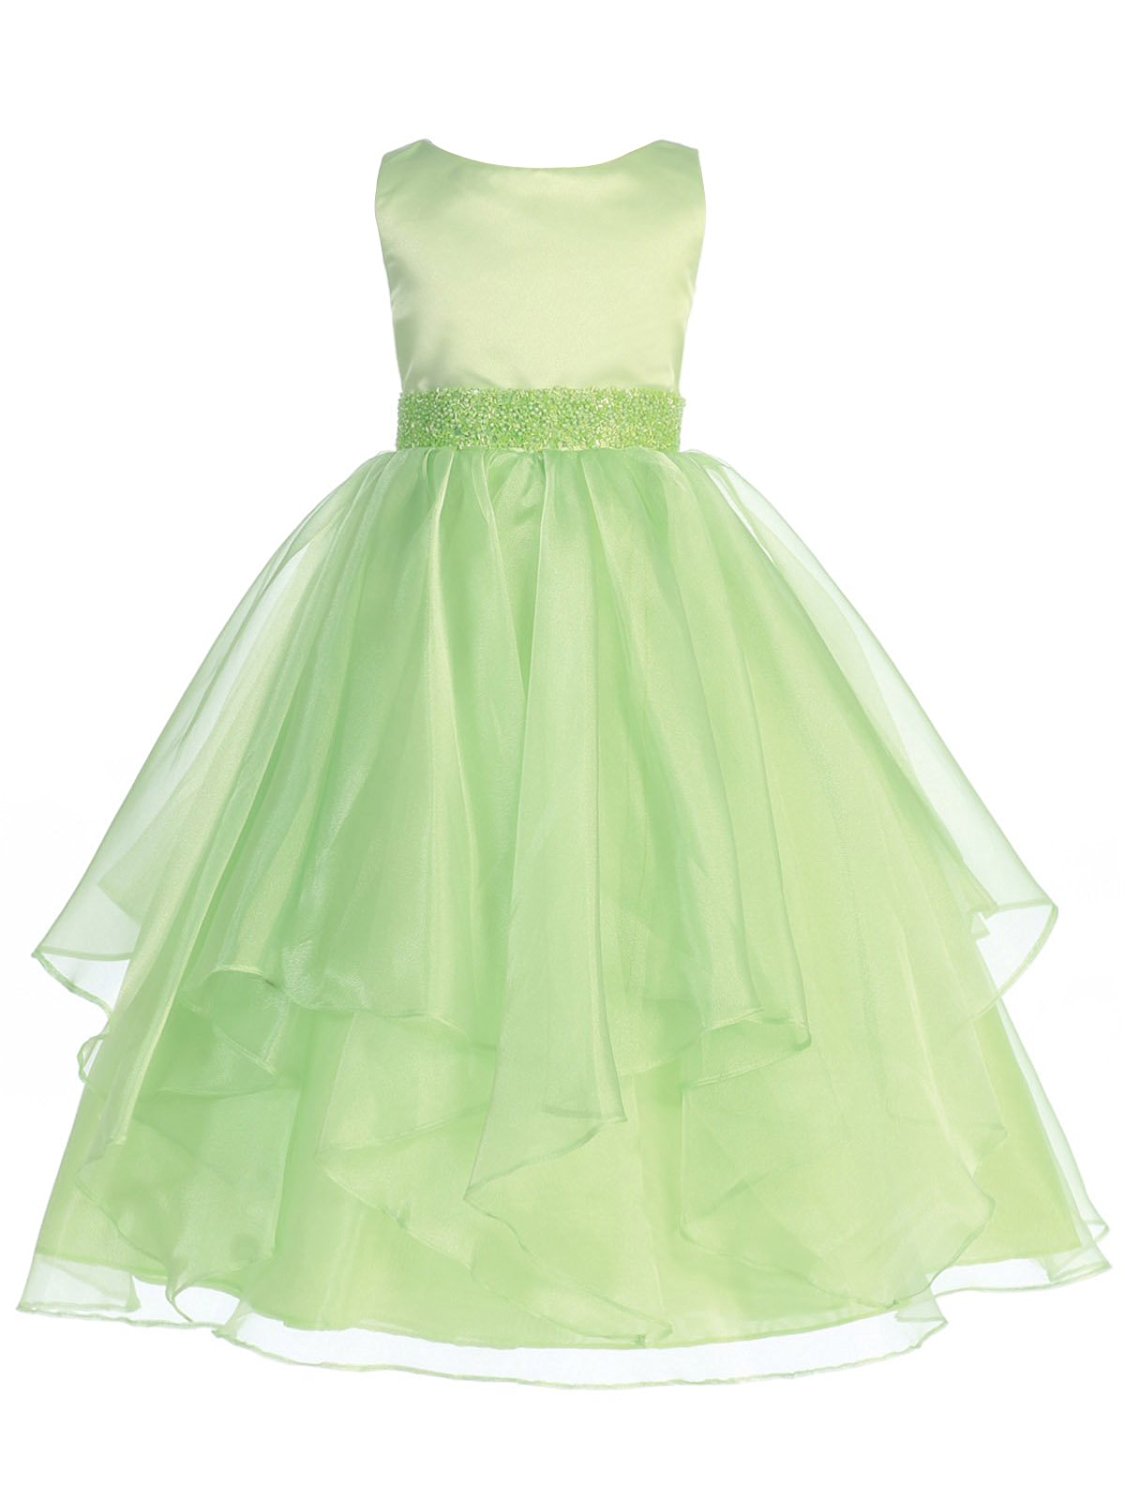 Chic Baby Girls Asymmetric Ruffles Satin/Organza Flower Girl Dress-Lime-2